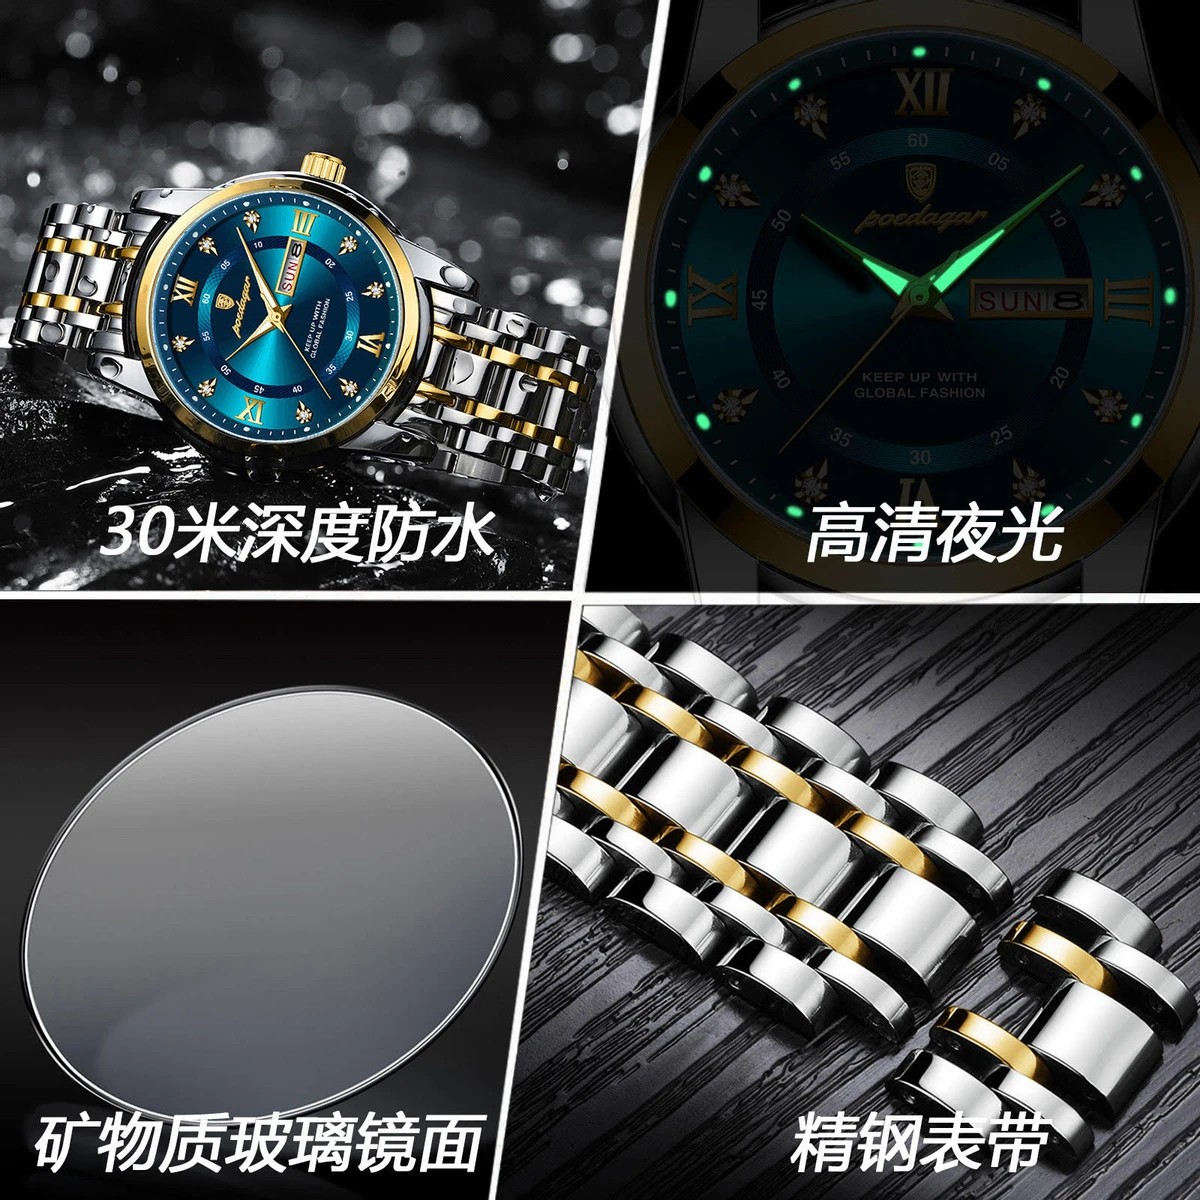 POEDAGAR Luxury Watch for Man Elegant Date Week Waterproof Luminous Men Watch Quartz Stainless Steel Sports Men's Watches- Silver & Golden